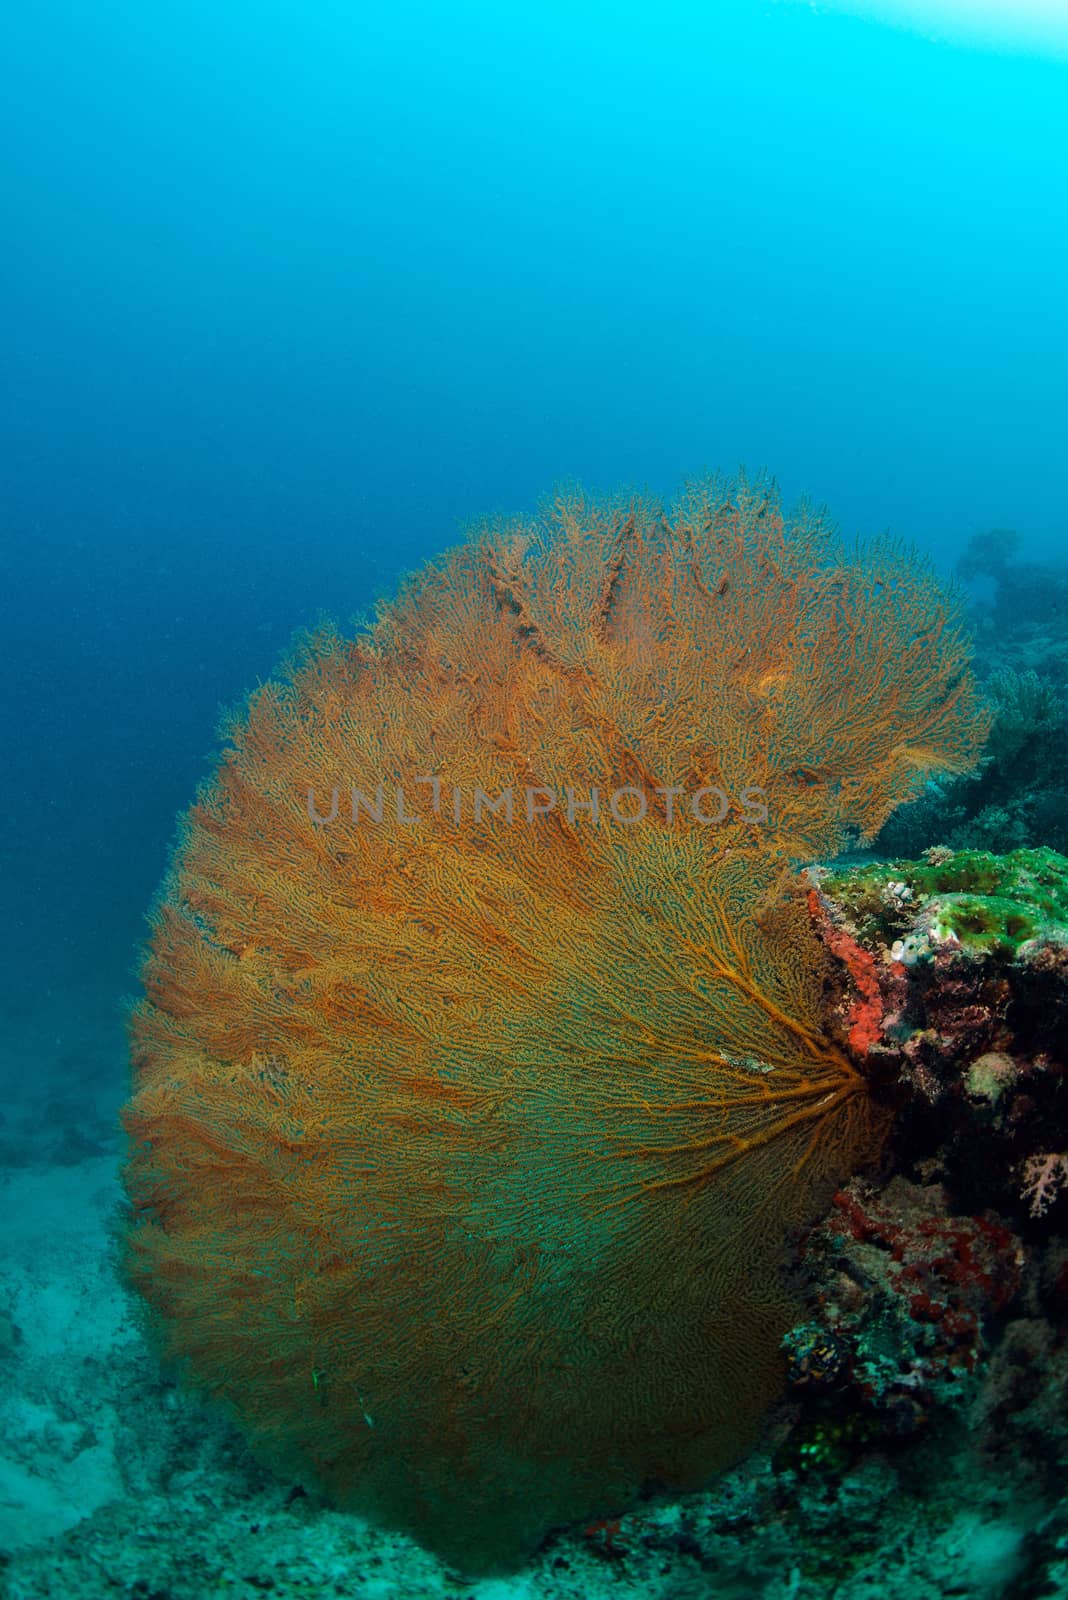 Giant seafan underwater in Sipadan, Malaysia by think4photop